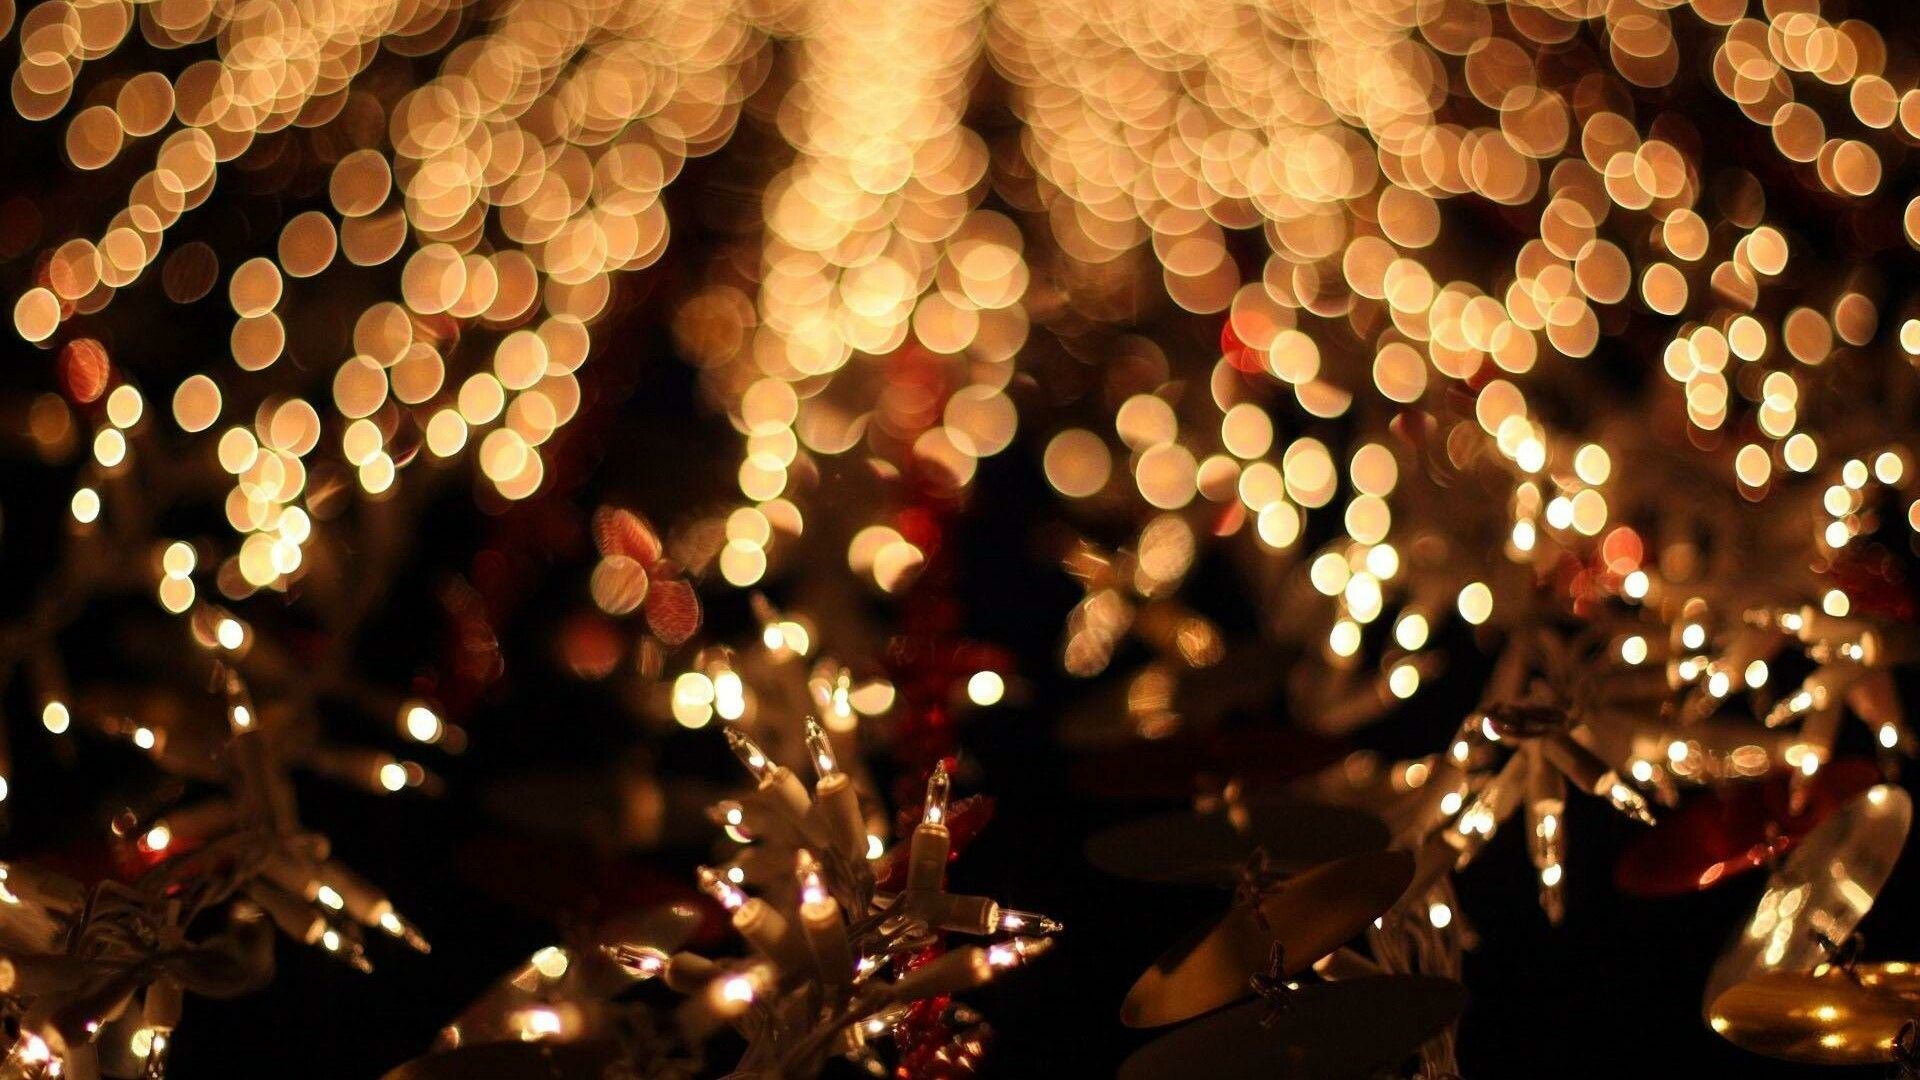 Fairy Lights: Illumination, One of the symbols of the holiday season. 1920x1080 Full HD Background.